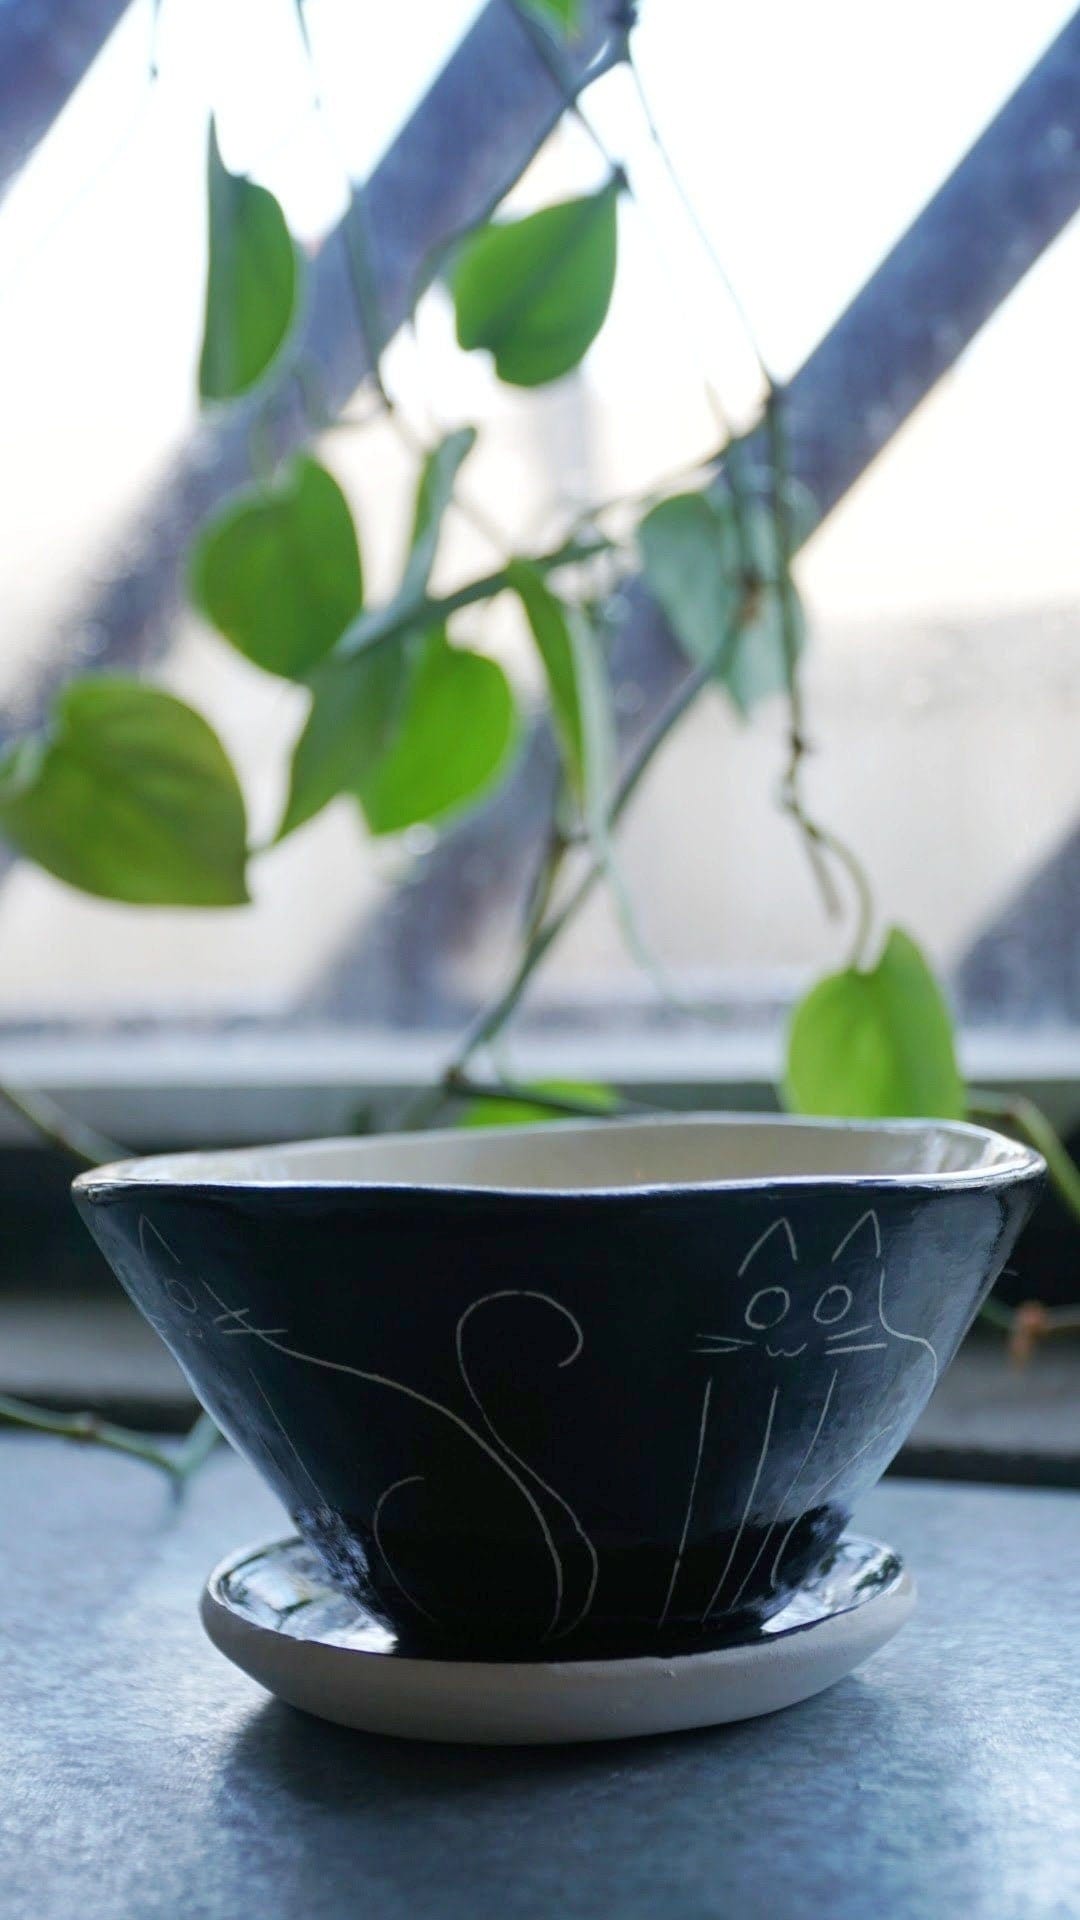 Black & White Glazed Table Planter w/ "Kitty" Design - Matching Tray - Succulent Planter - Small Plant Pot - Propagating Planter - Housewarming